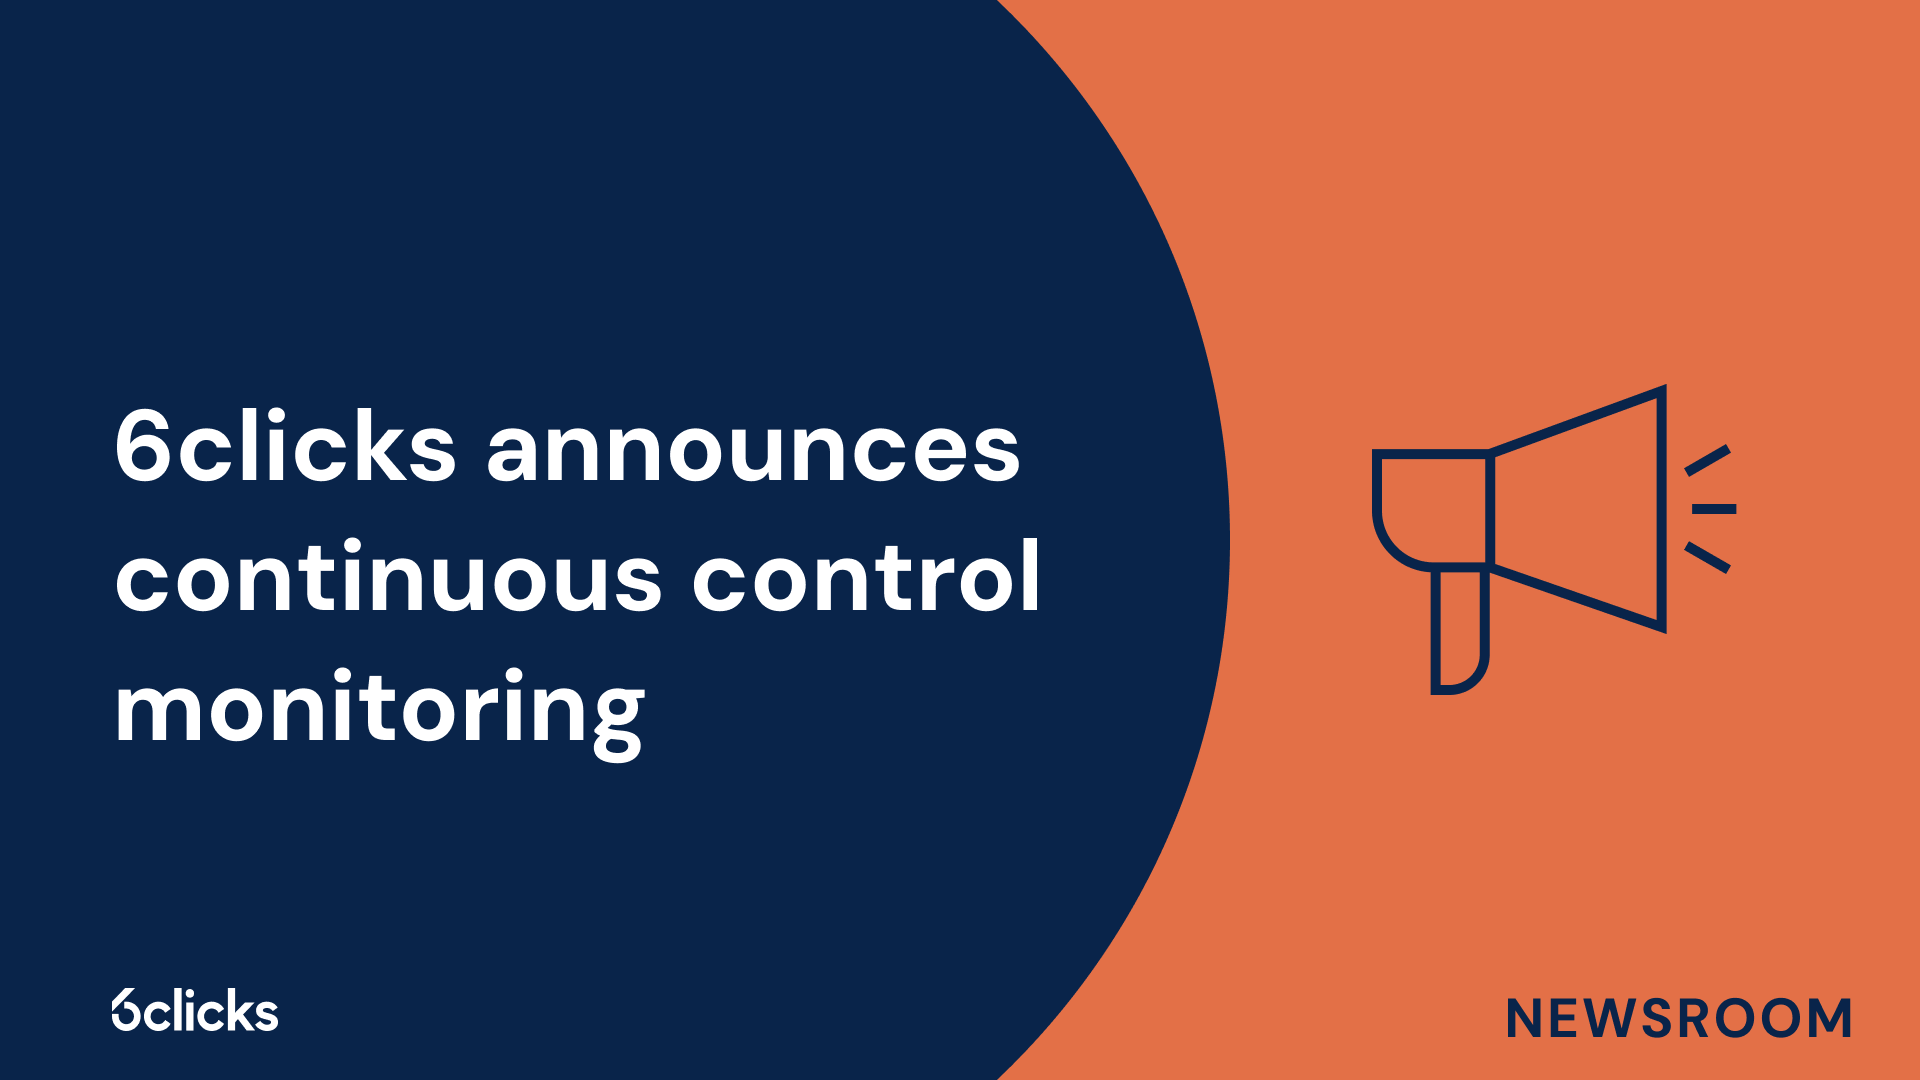 6clicks announces continuous control monitoring